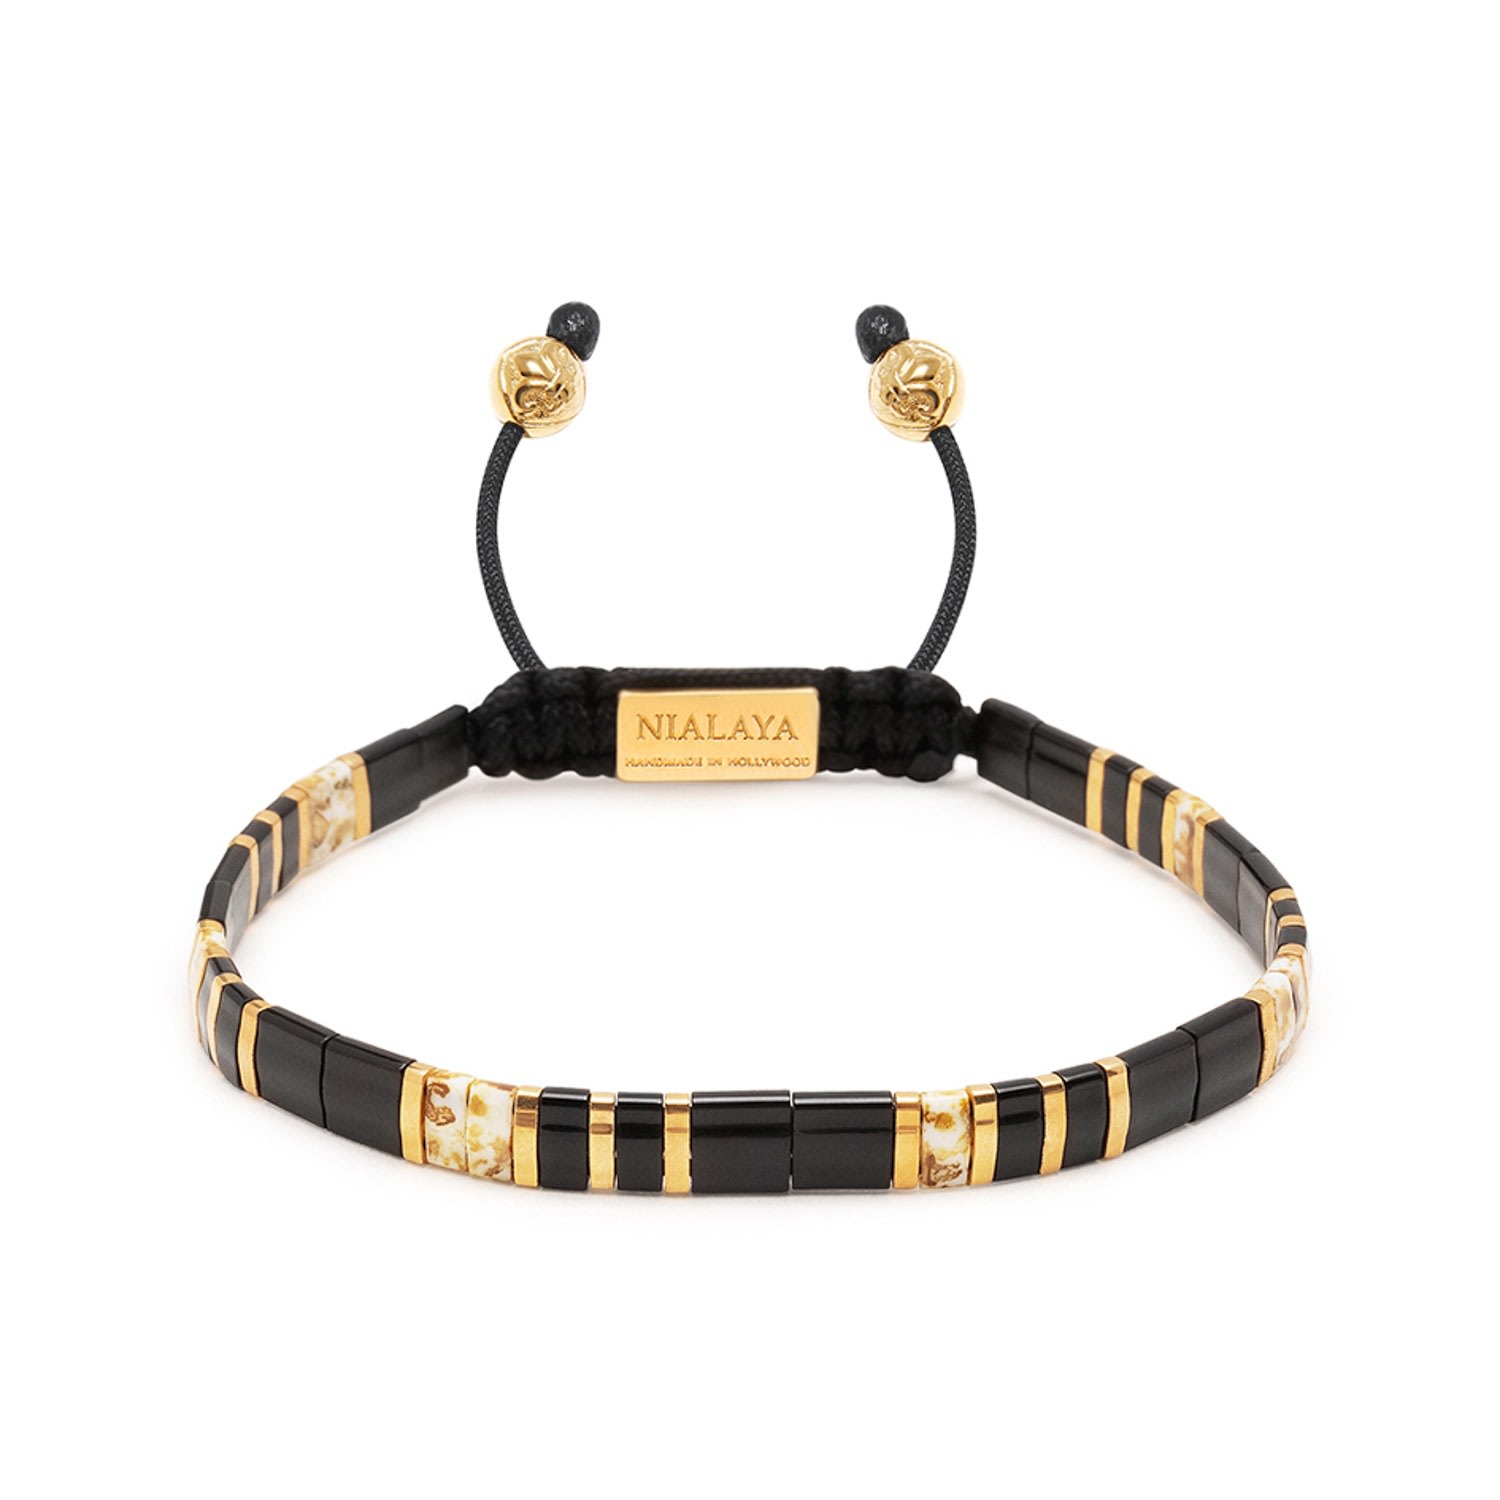 Gold / Black Men's Bracelet With Black And Gold Miyuki Tila Beads Nialaya Jewelry